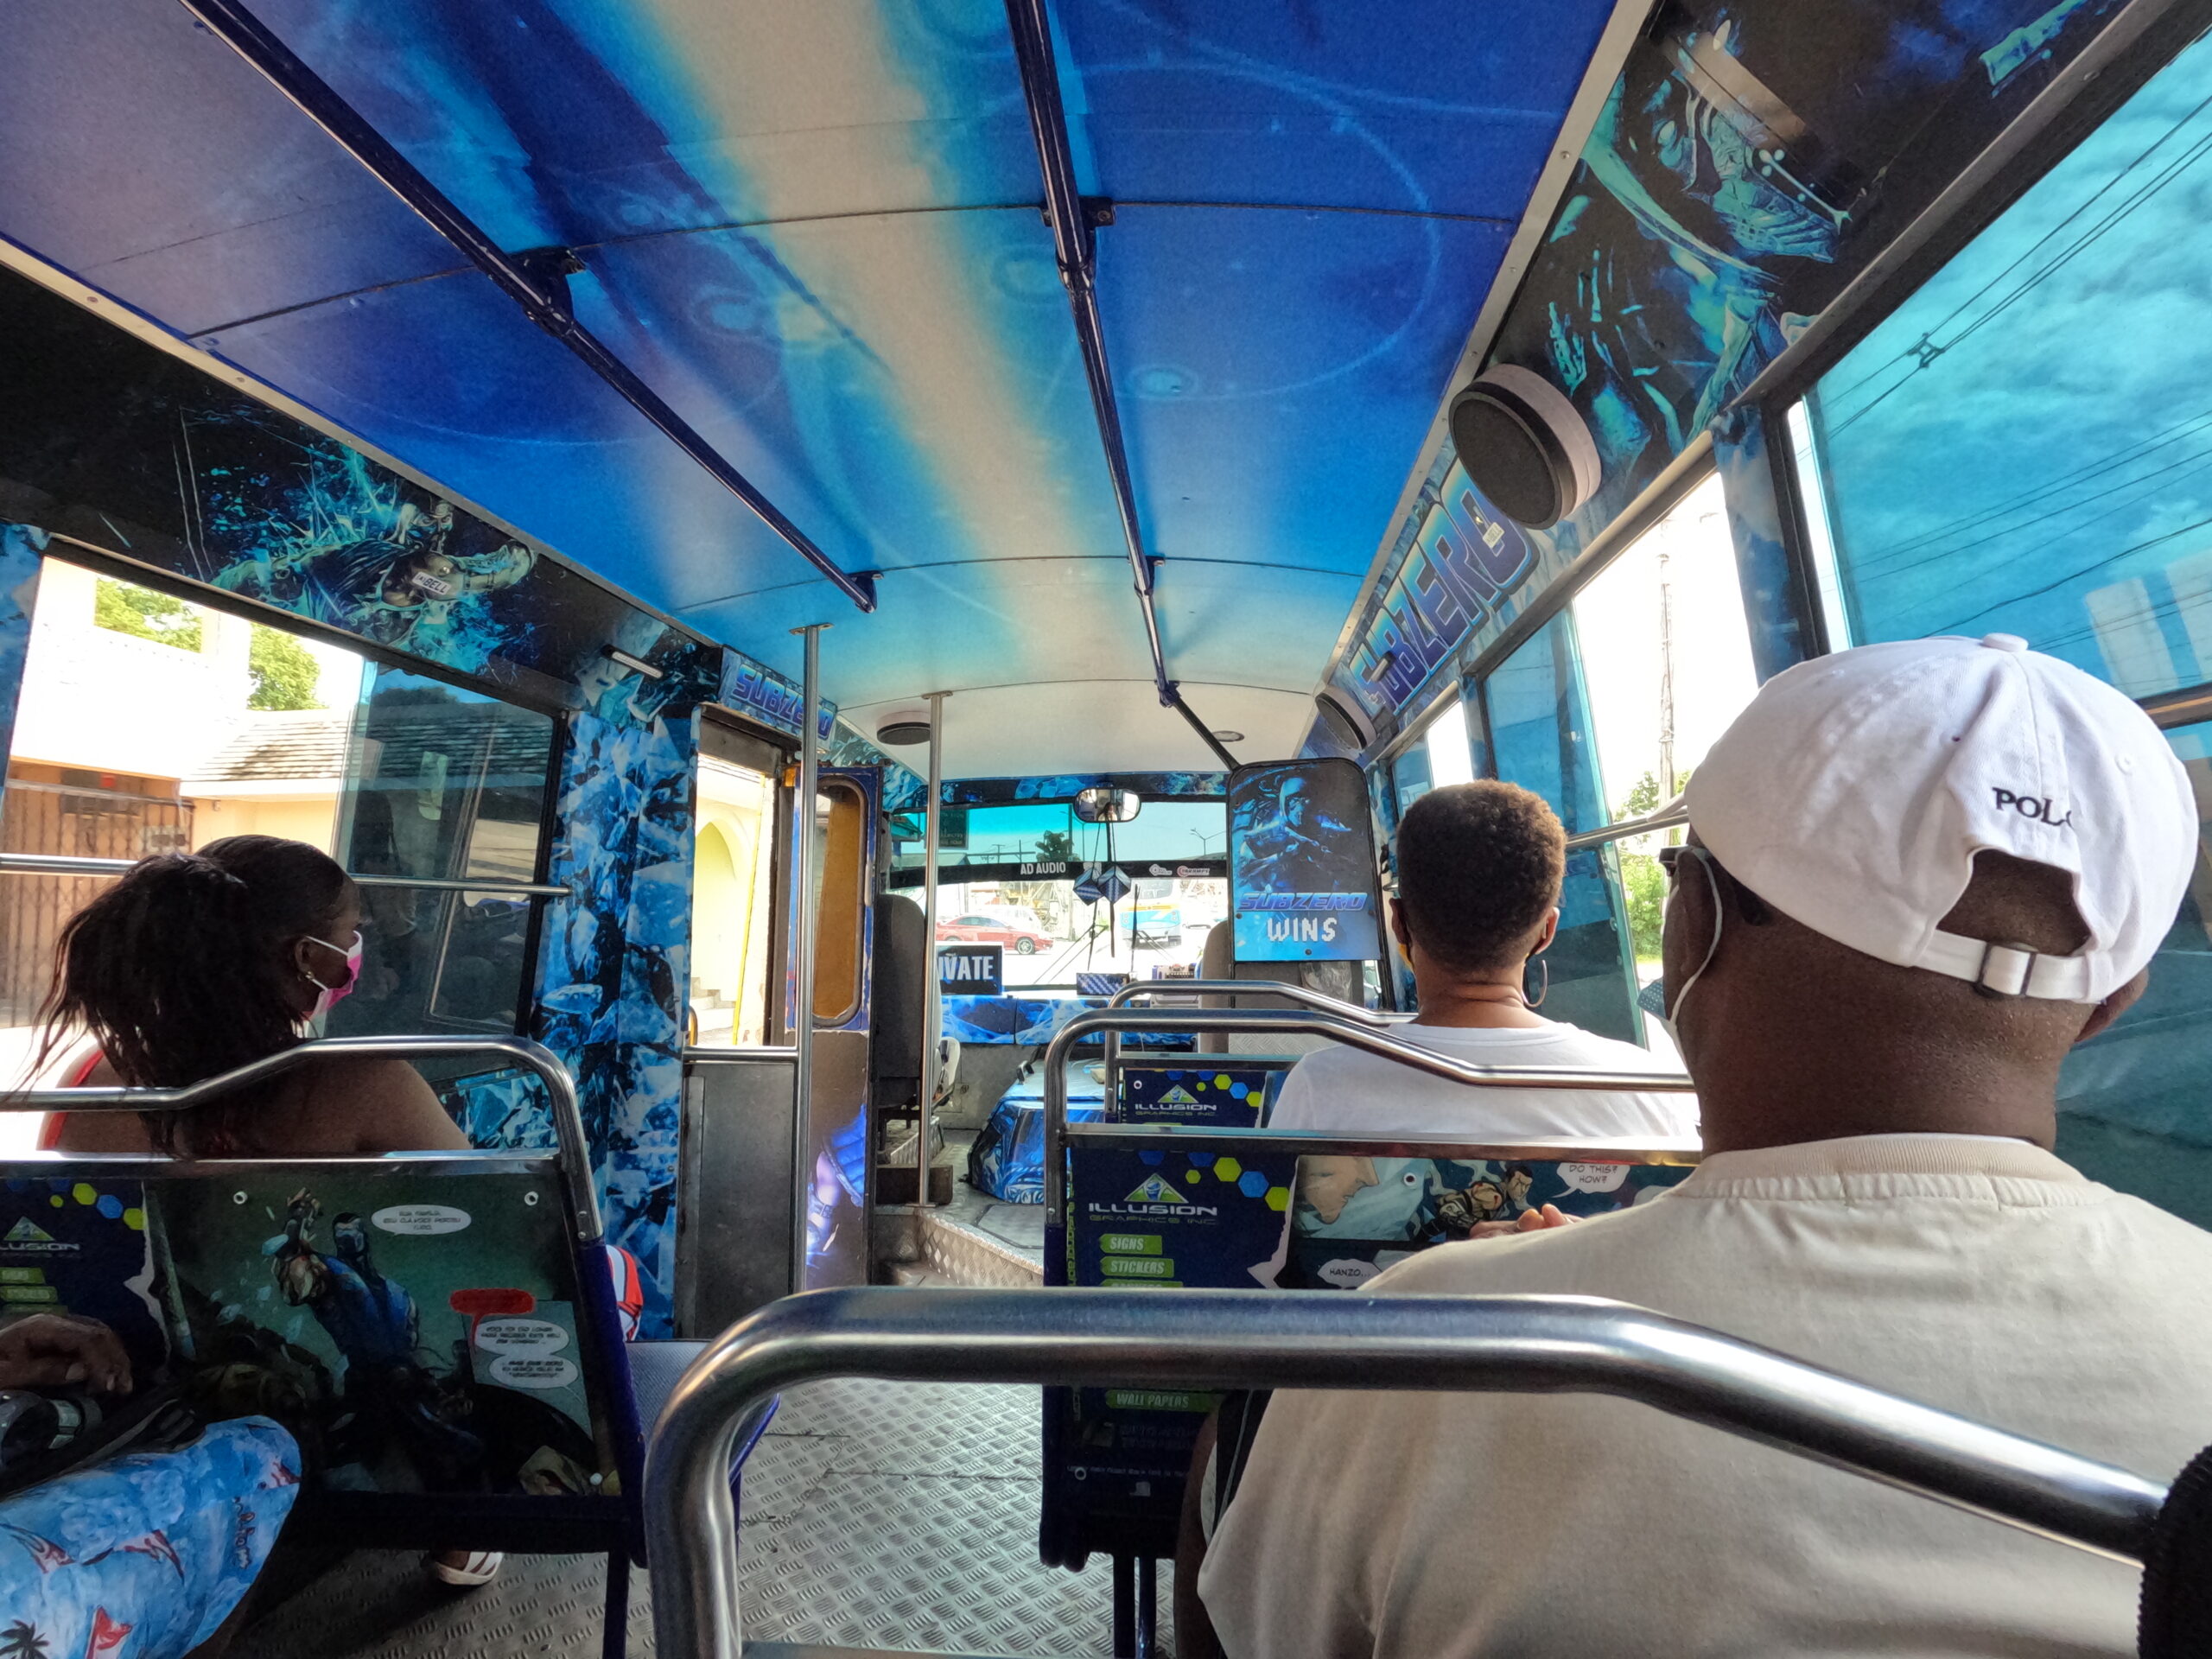 Bus to Bridgetown, Barbados for $3.50